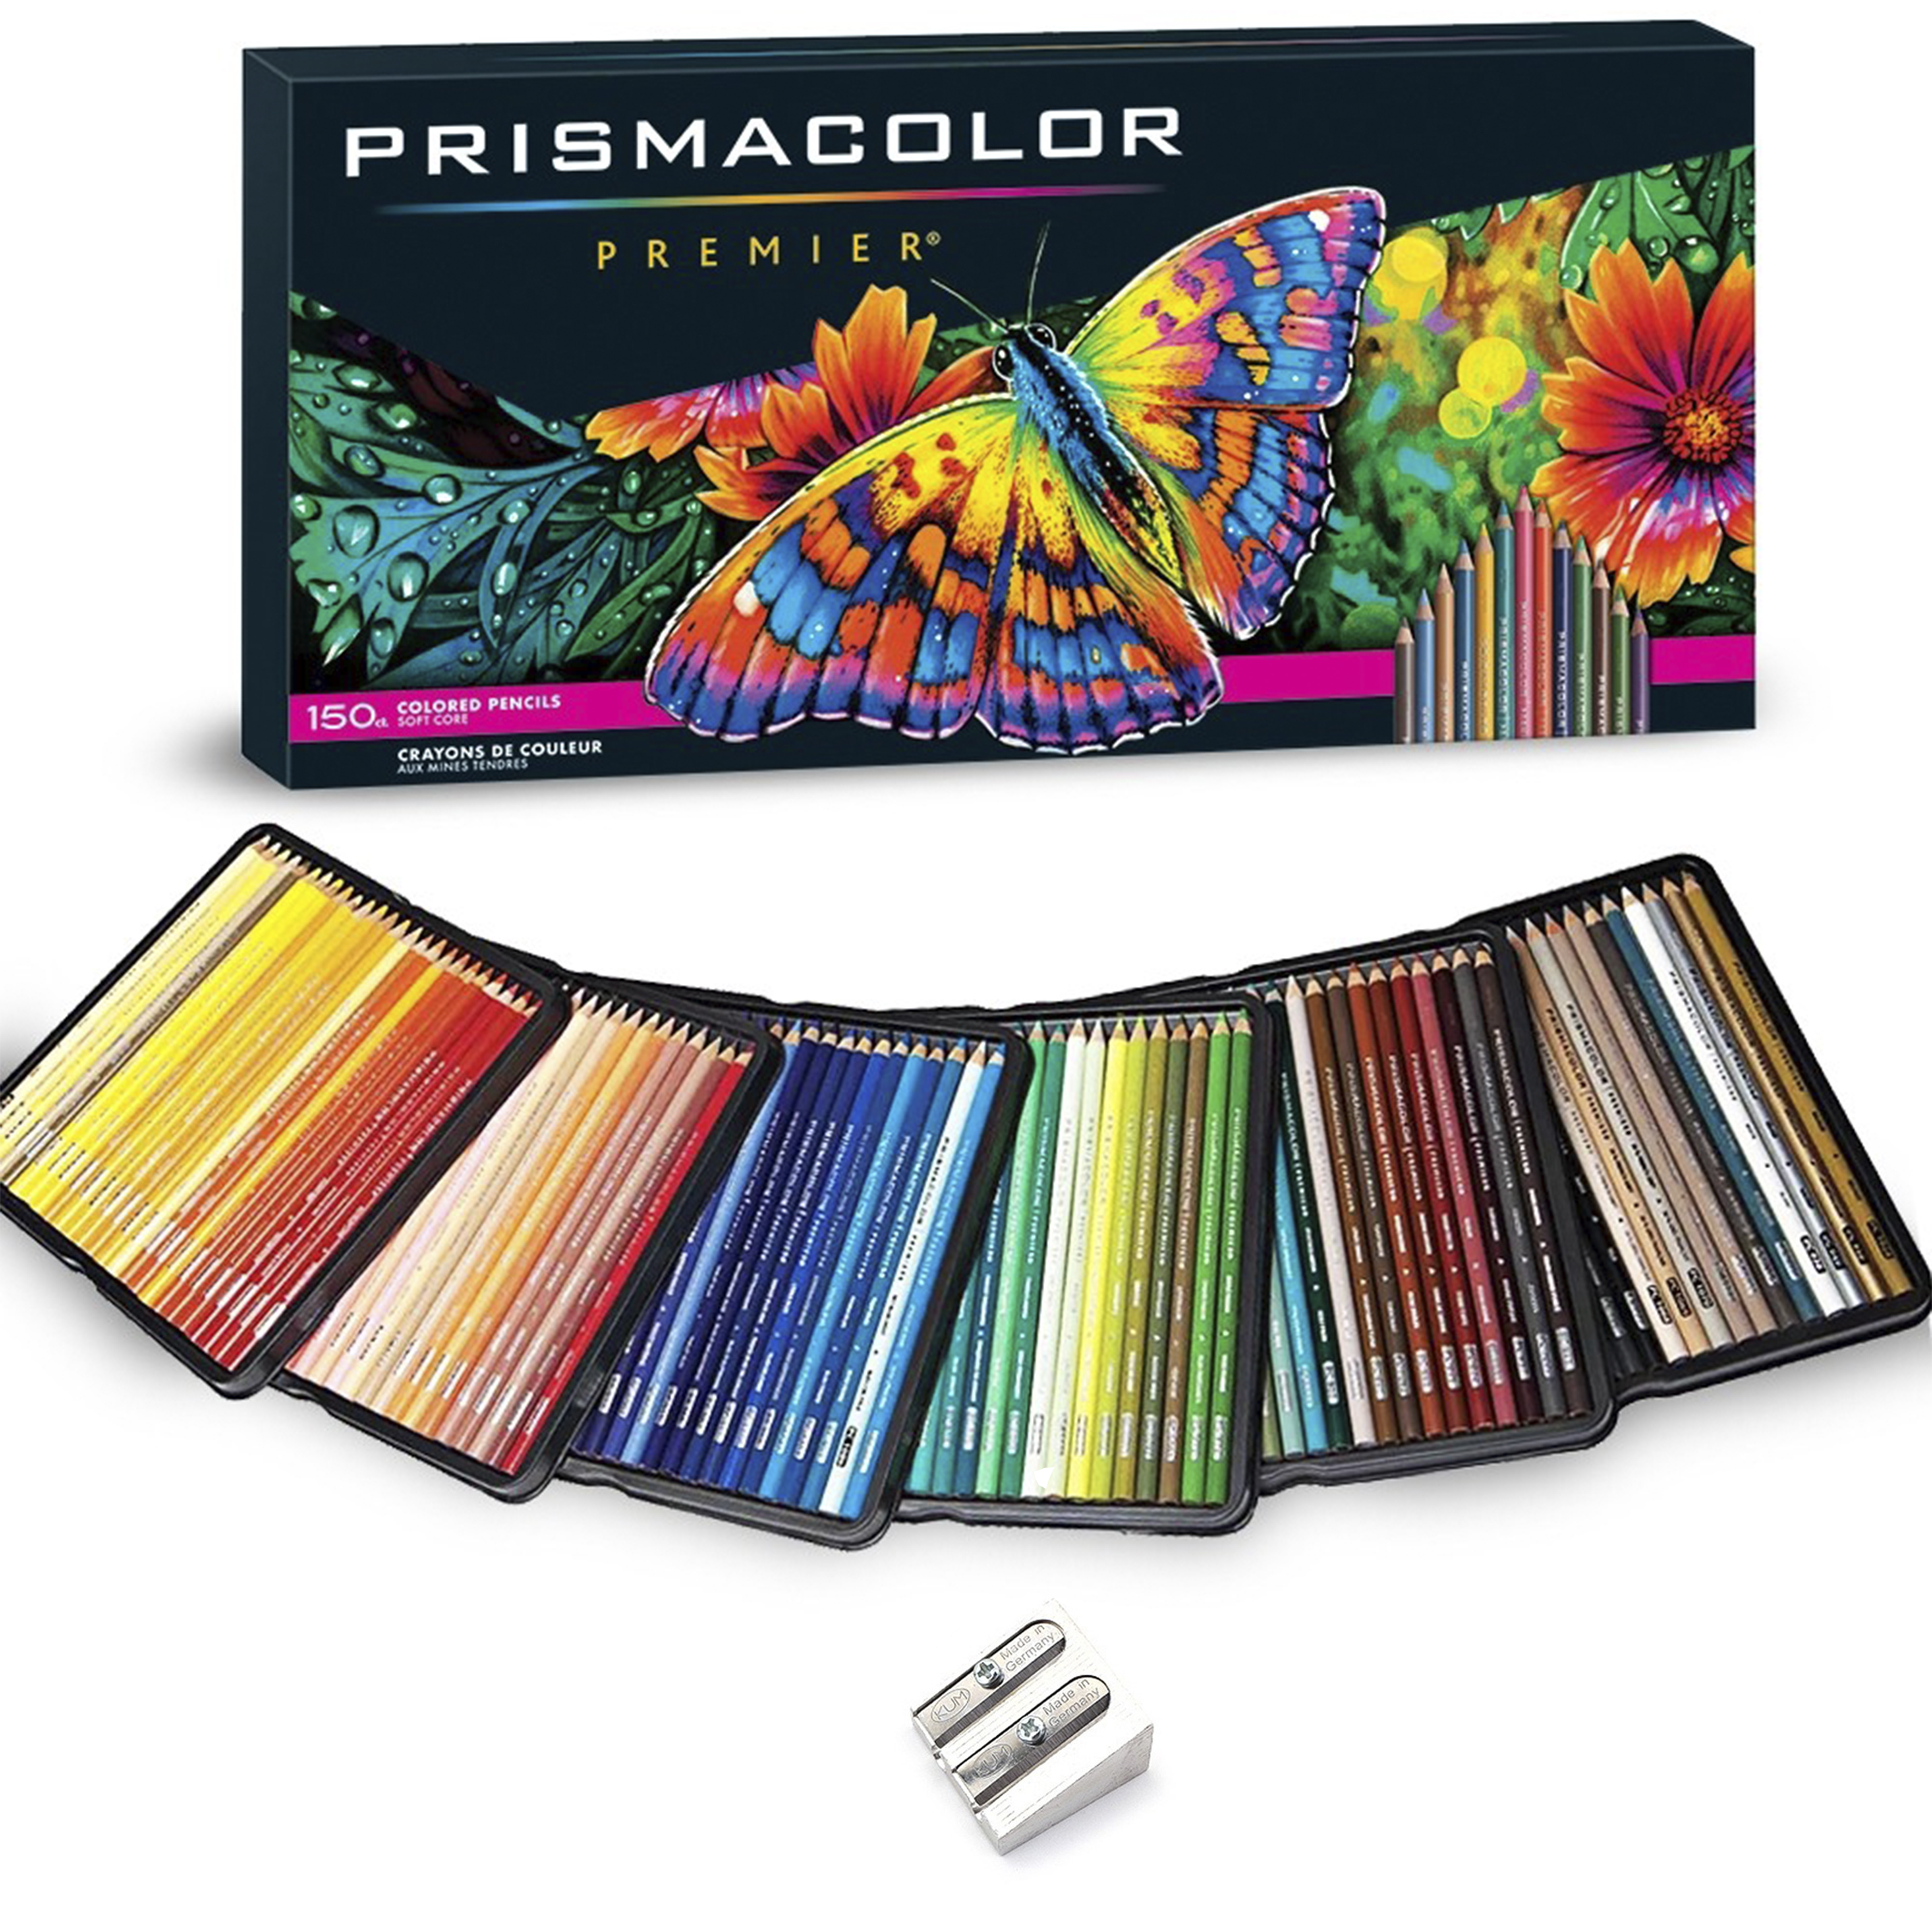 Prismacolor Art Sets in Art Supplies 